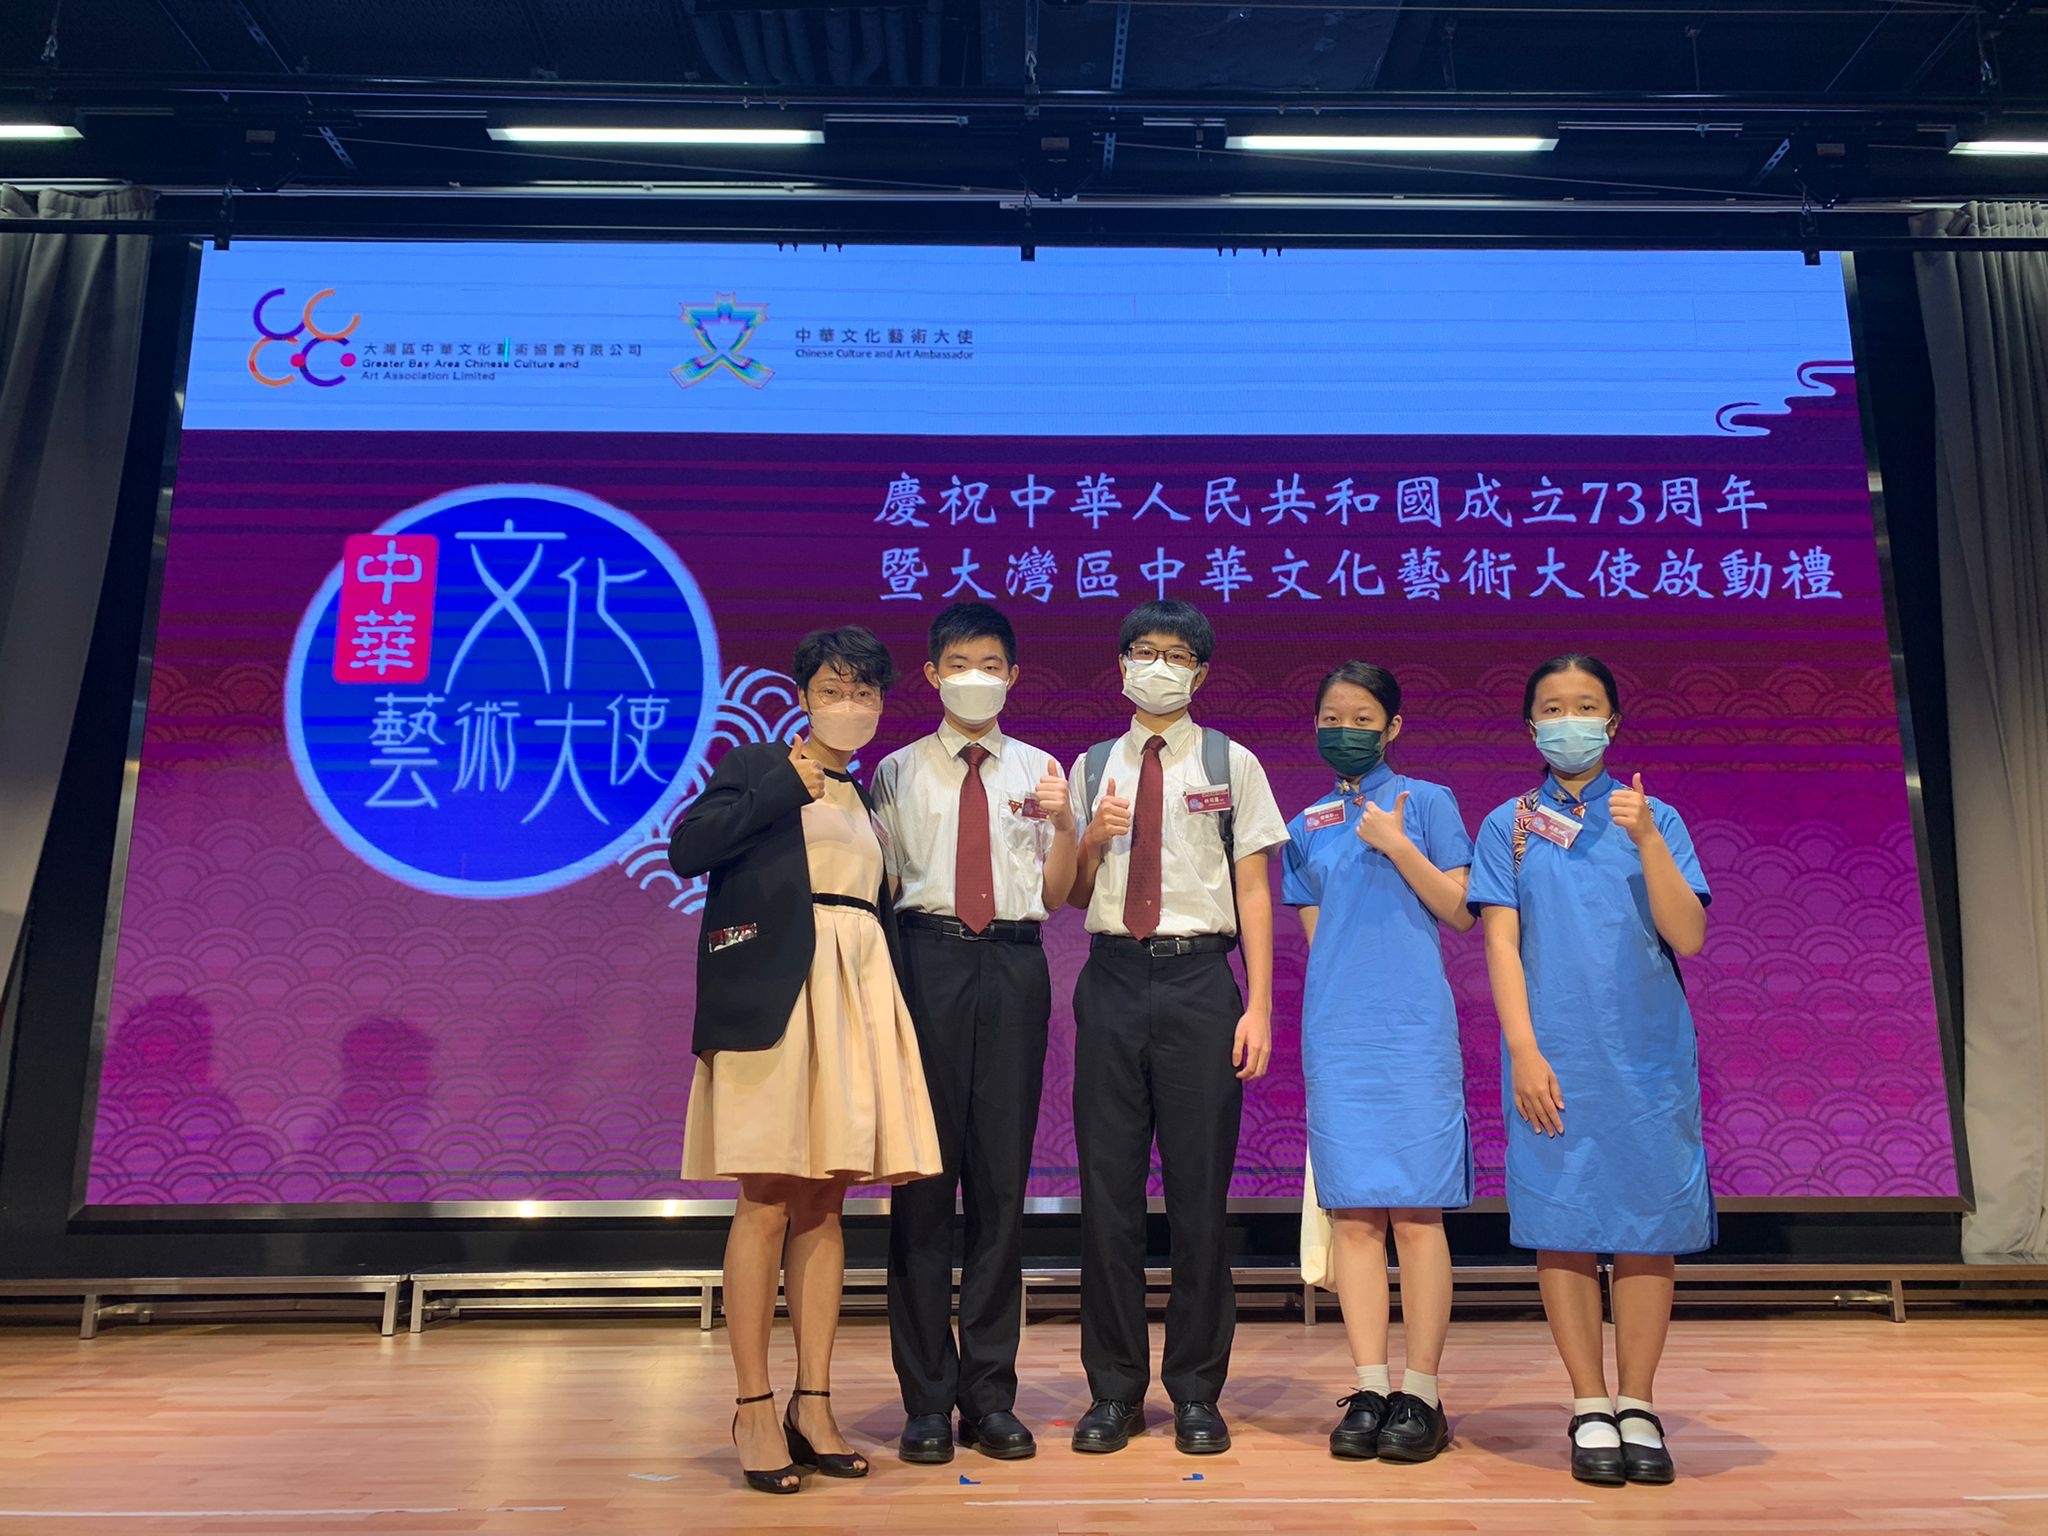 Chinese Culture and Arts Ambassador Program